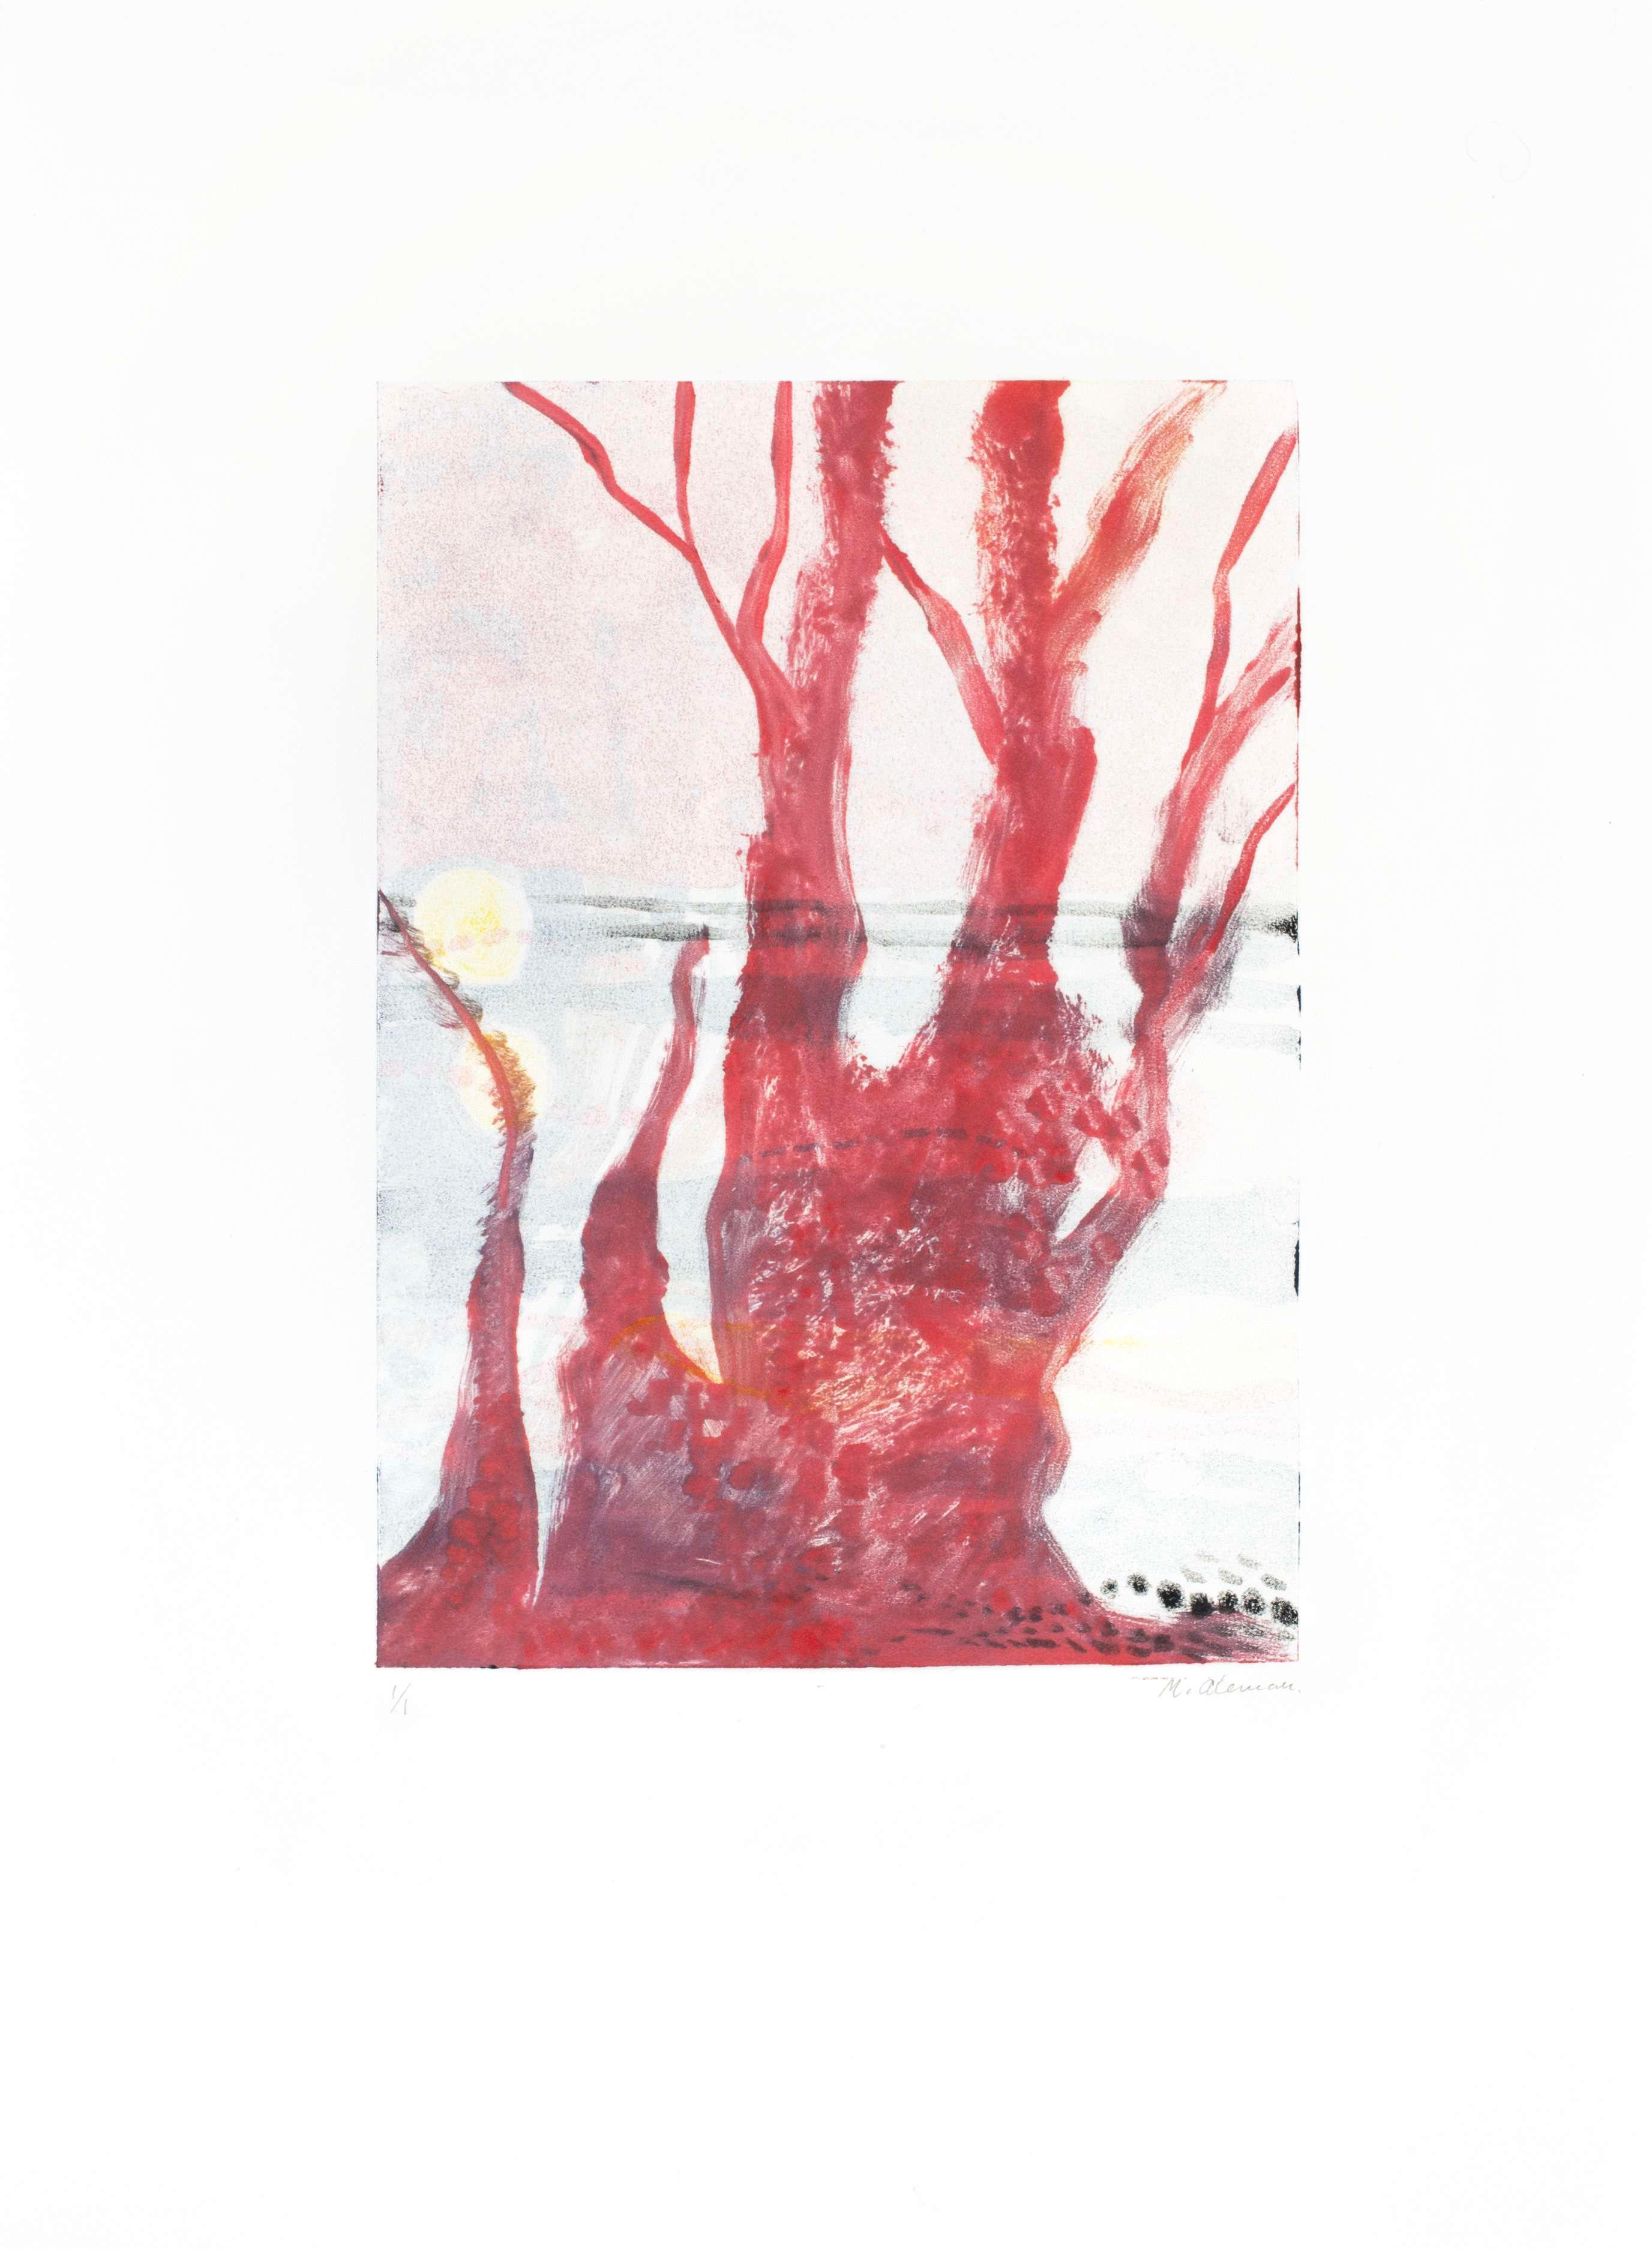 Yggdrasil, monotype, 30 x 21 cm